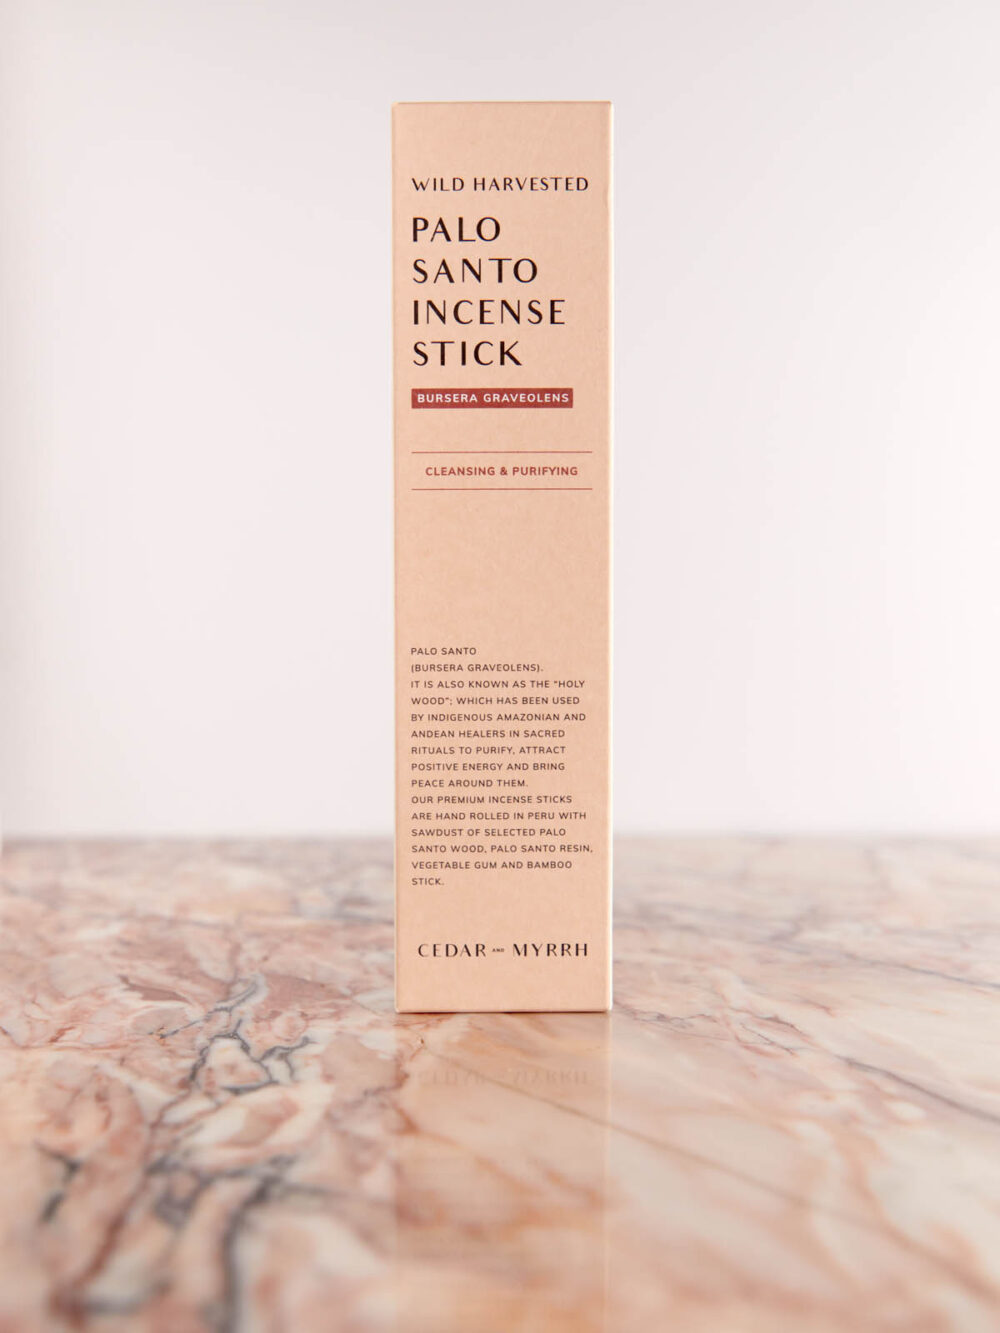 Hand Rolled Palo Santo Incense Sticks by Cedar & Myrrh box on pink marble